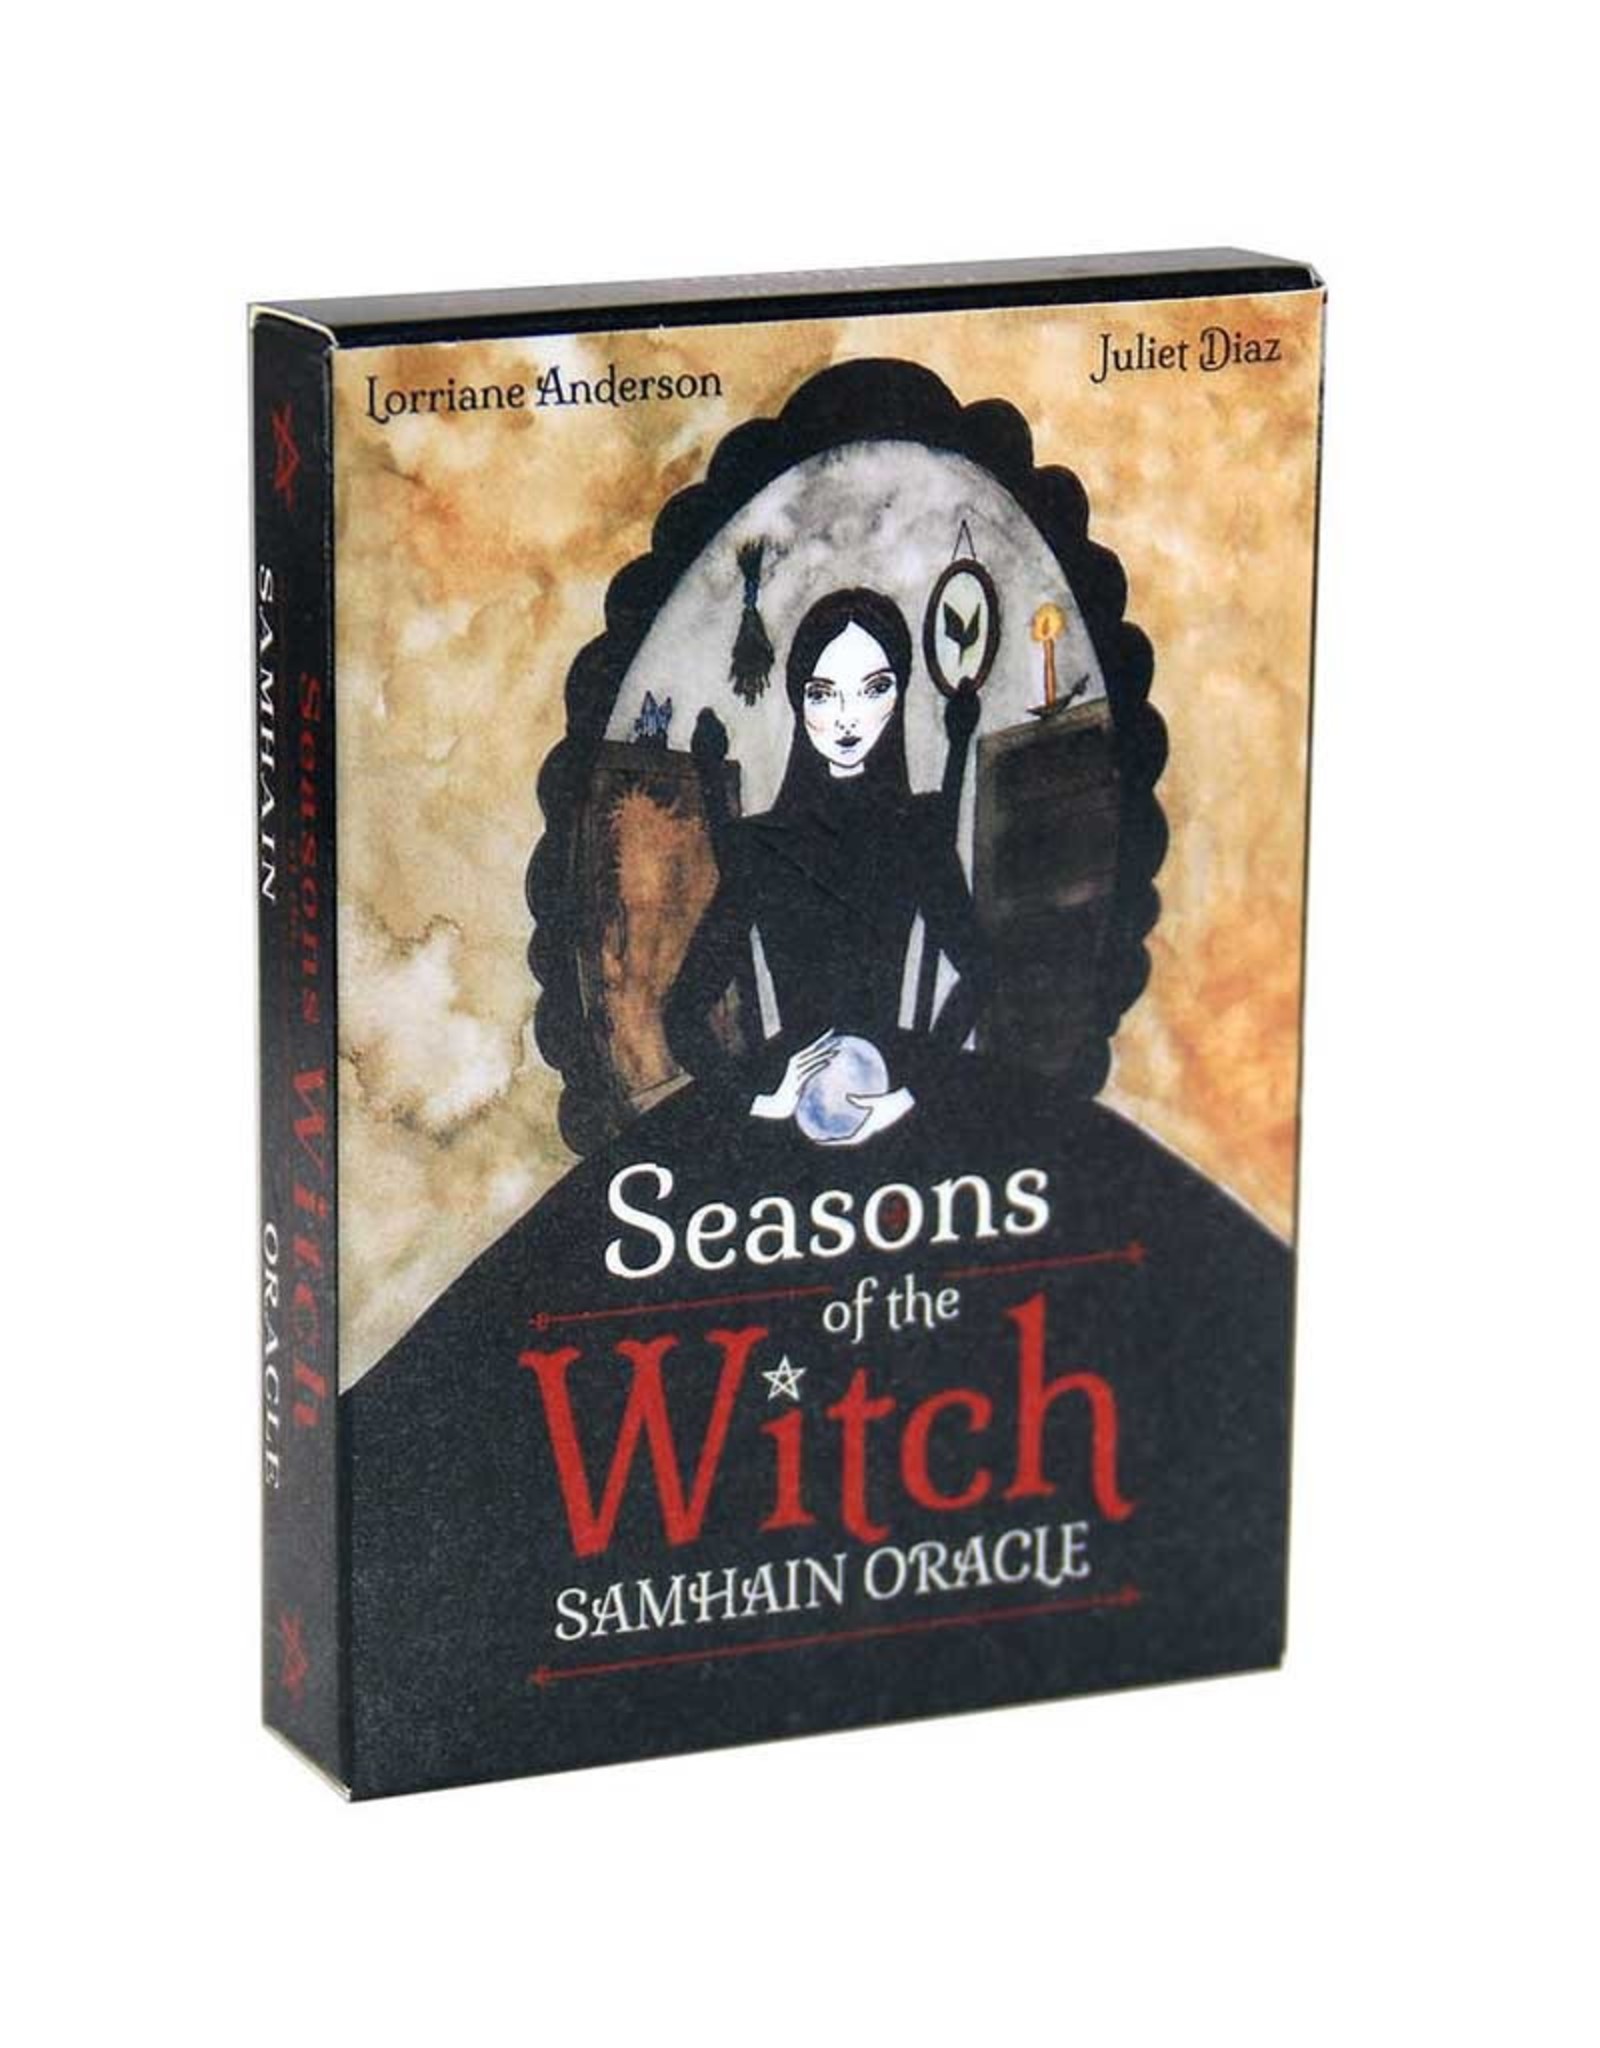 Lorriane Anderson Seasons of the Witch Samhain Oracle by Lorriane Anderson & Juliet Diaz